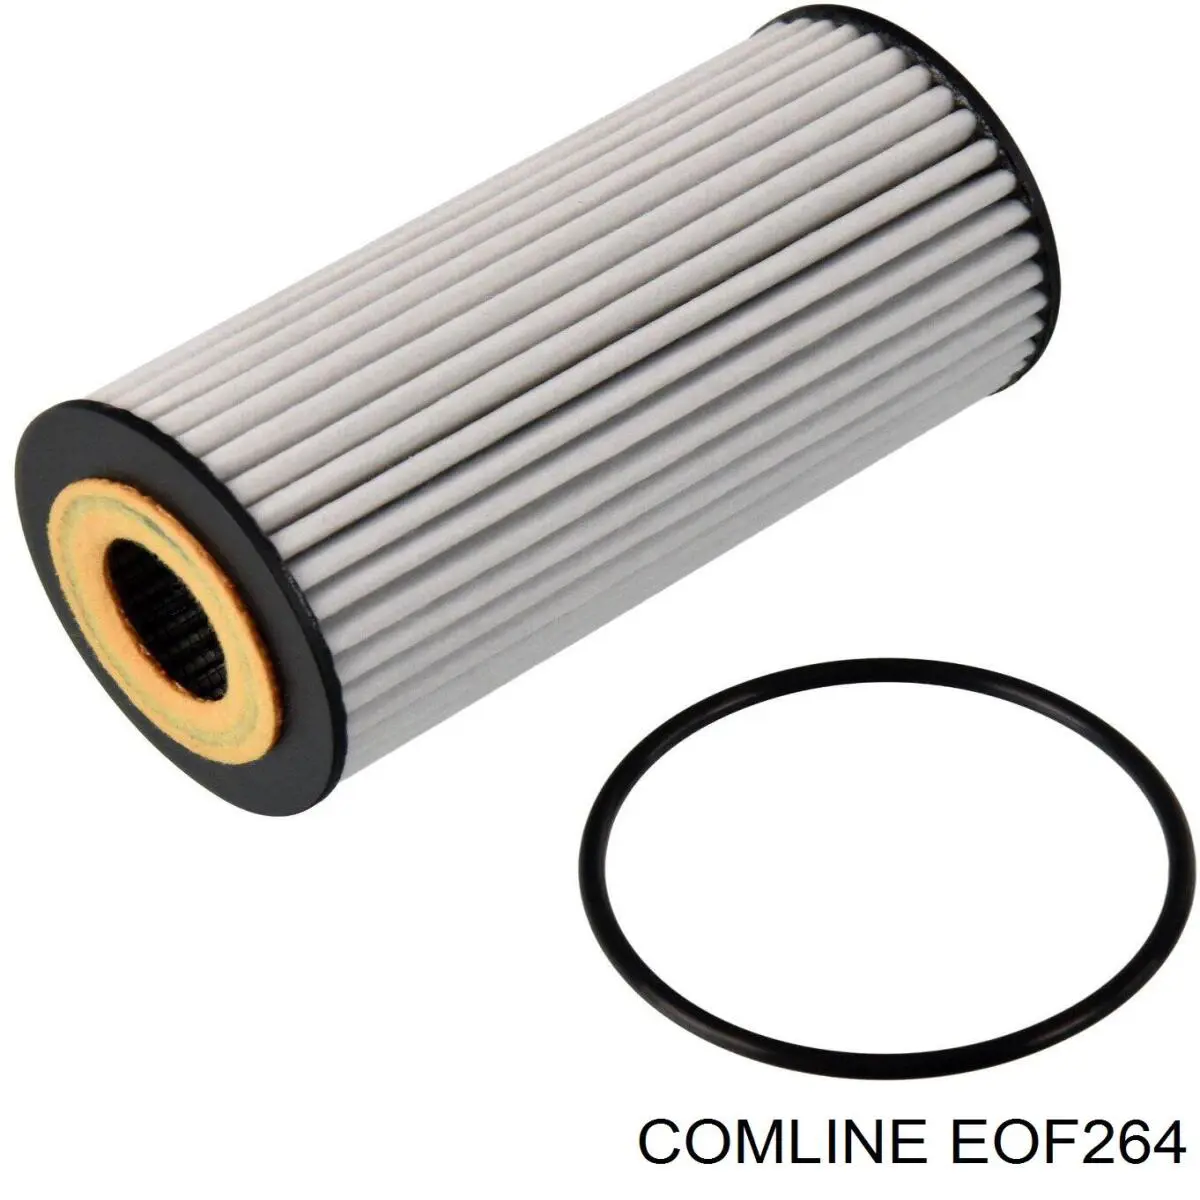 EOF264 Comline filtro de aceite